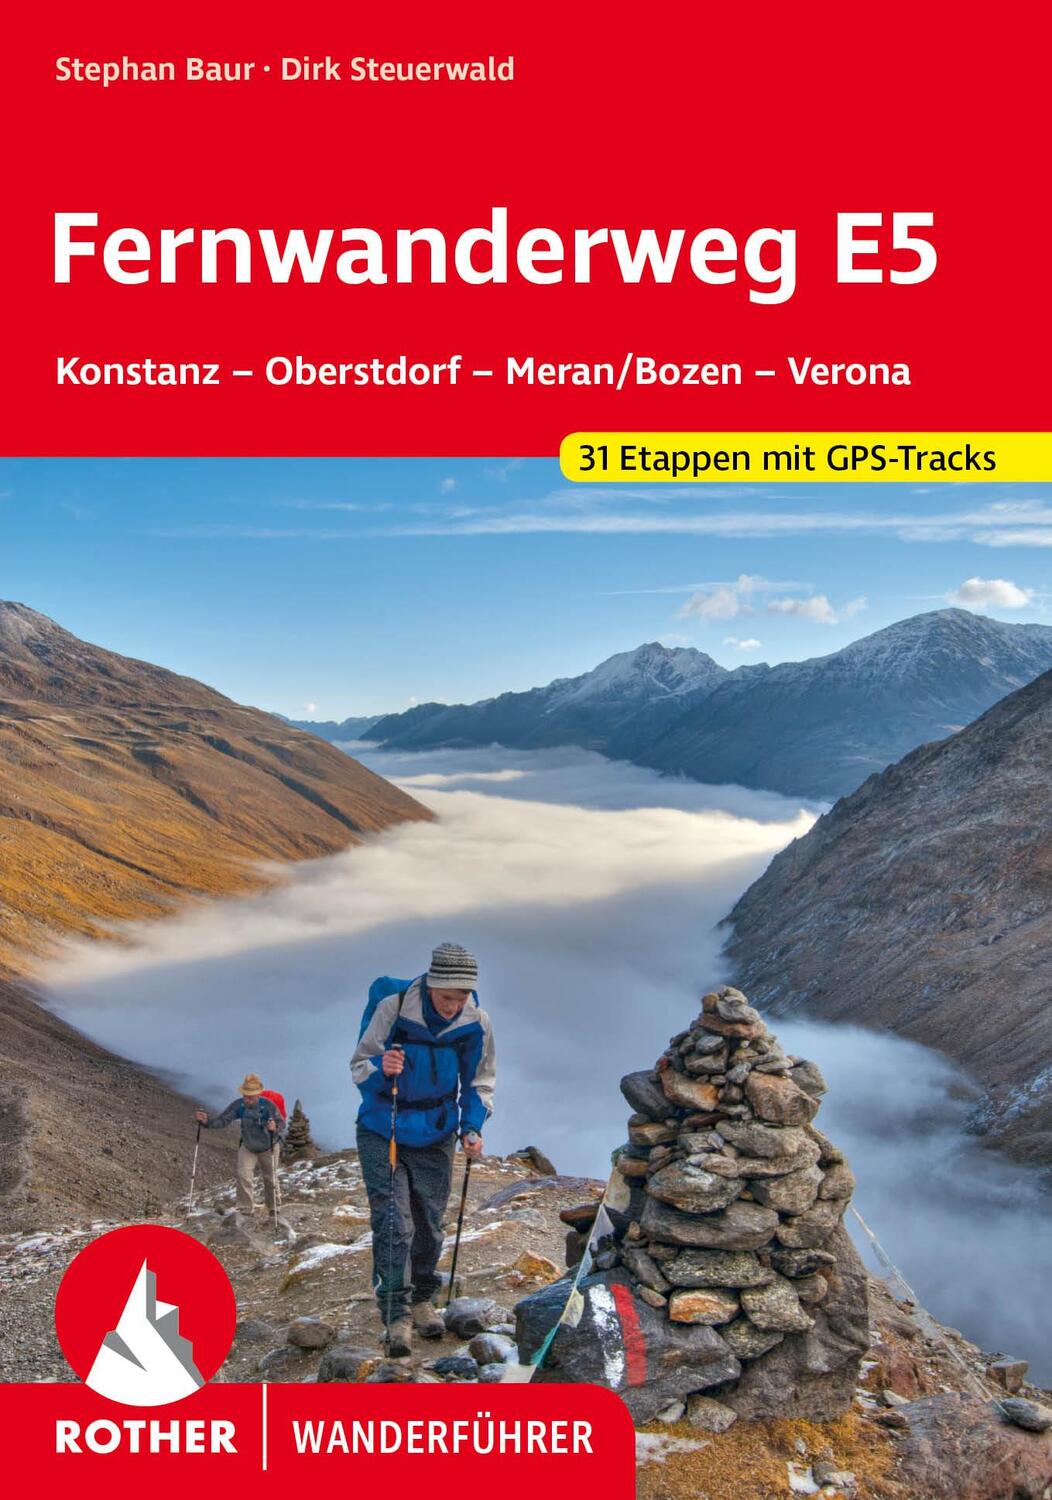 Fernwanderweg E5 - Steuerwald, Dirk